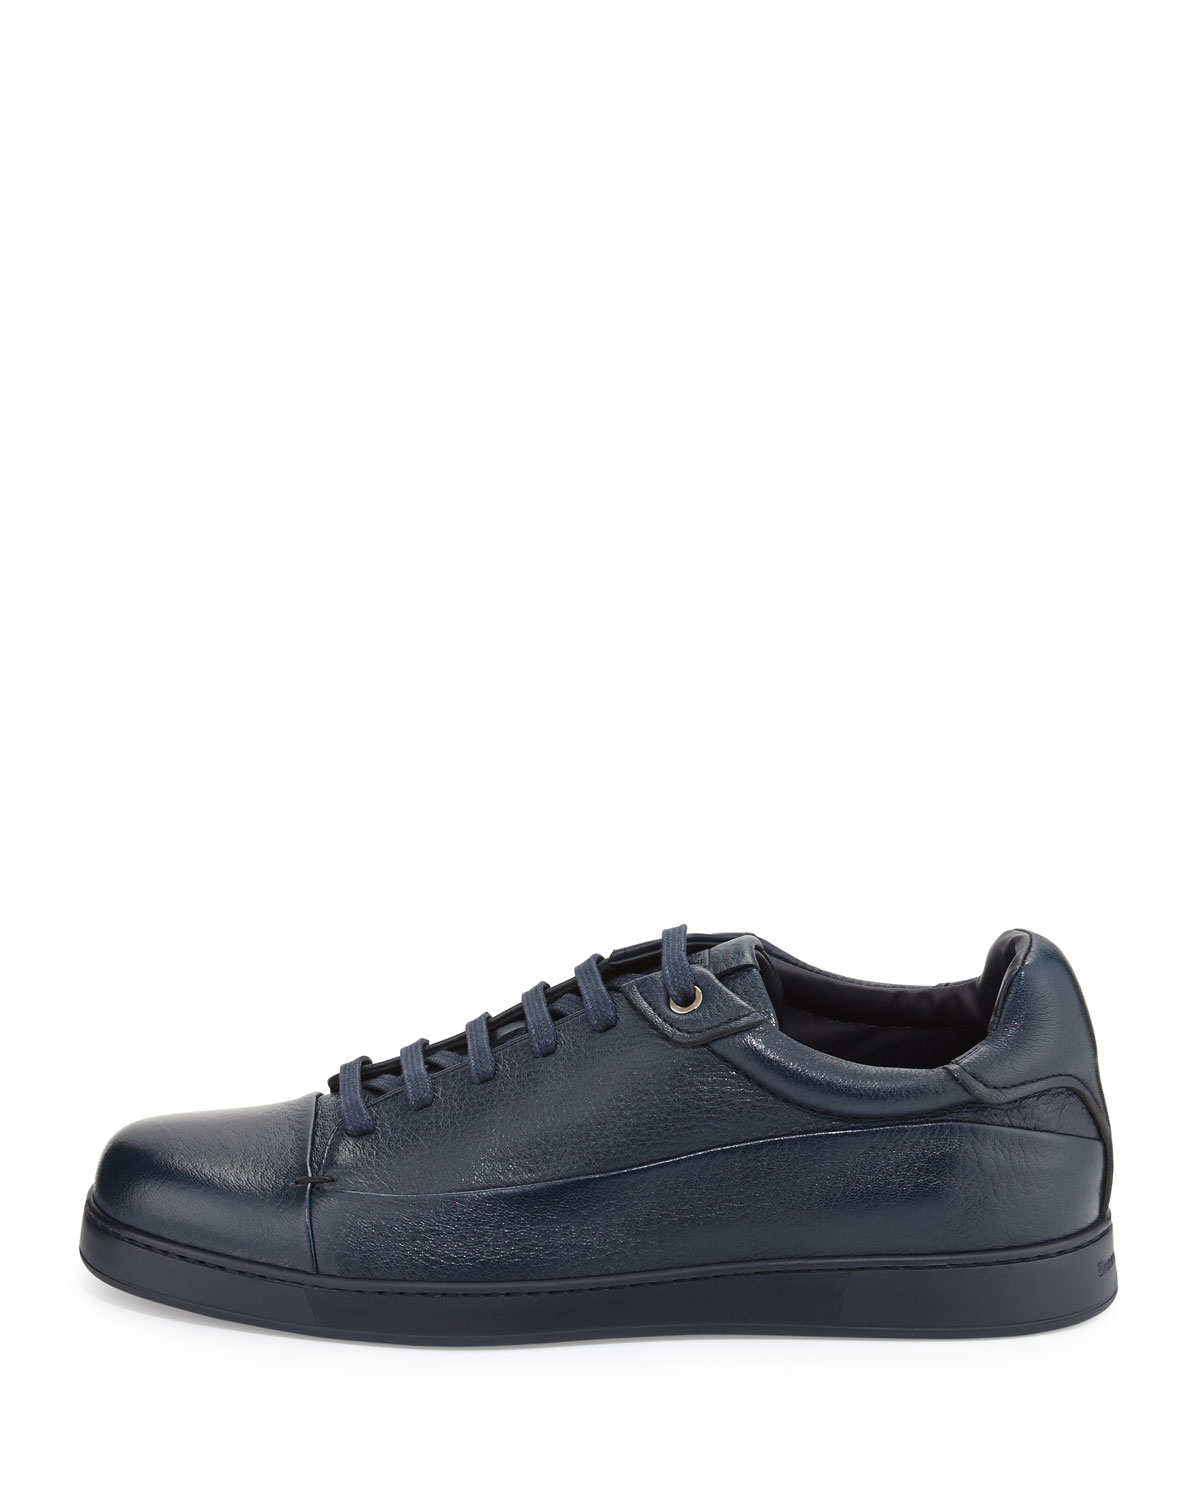 Lyst - Ermenegildo Zegna Leather Low-top Sneaker in Blue for Men